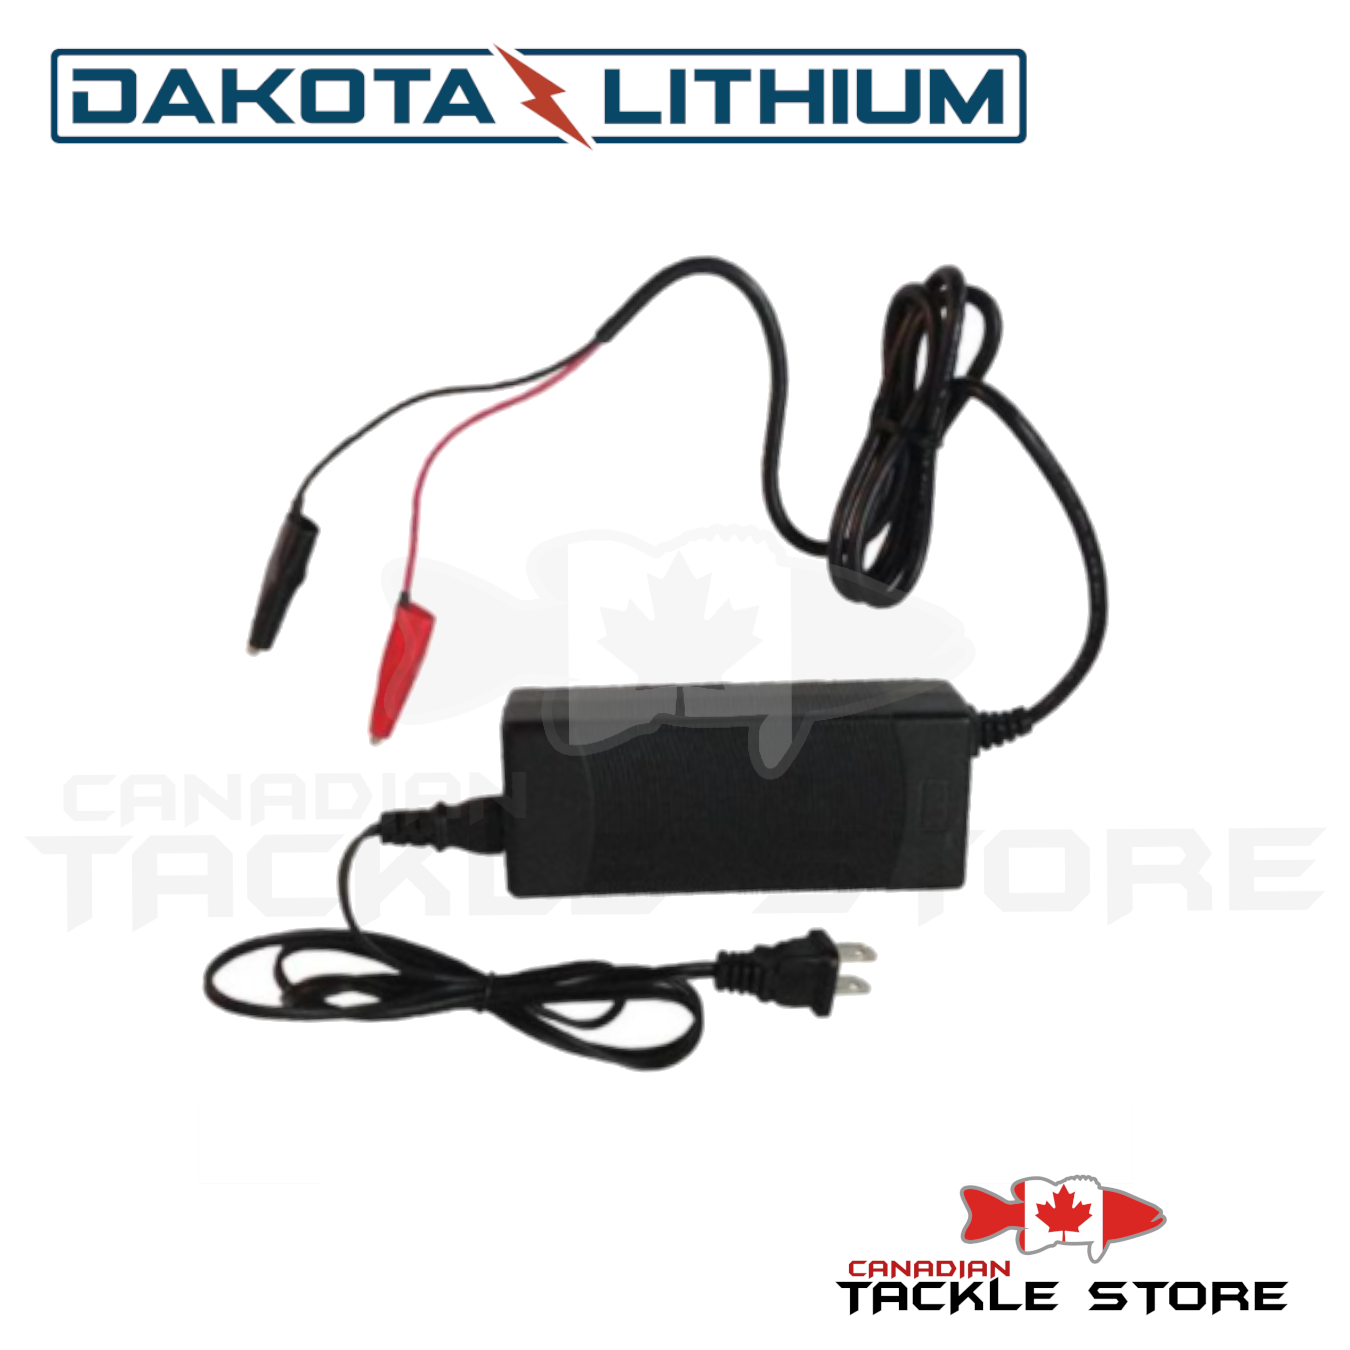 Dakota Lithium 12V 3A LiFePO4 Battery Charger